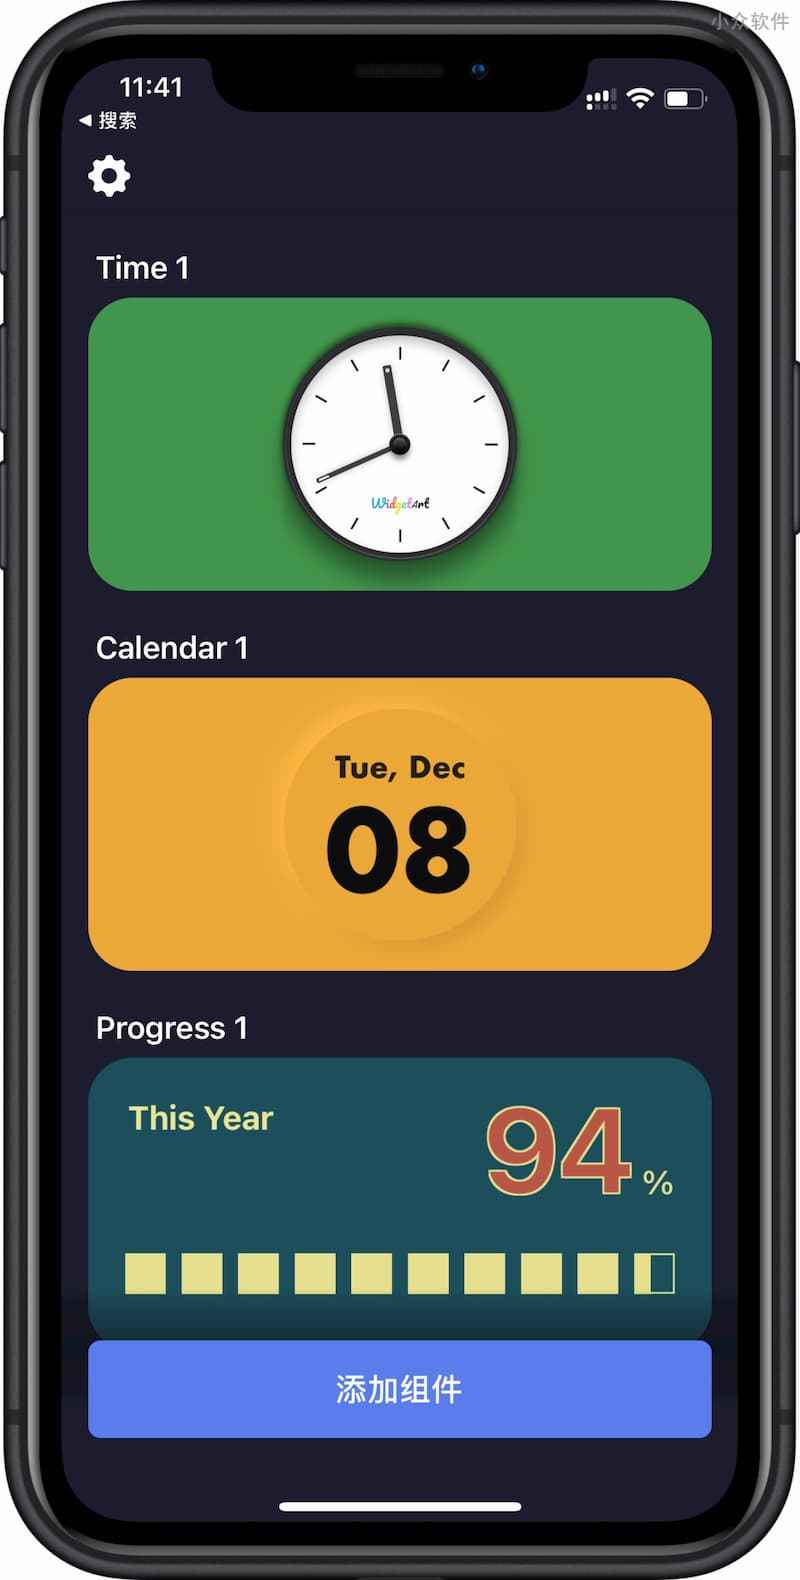 WidgetArt - 时间、照片、纪念日、步数等 7 个漂亮的屏幕小组件[iOS] 3